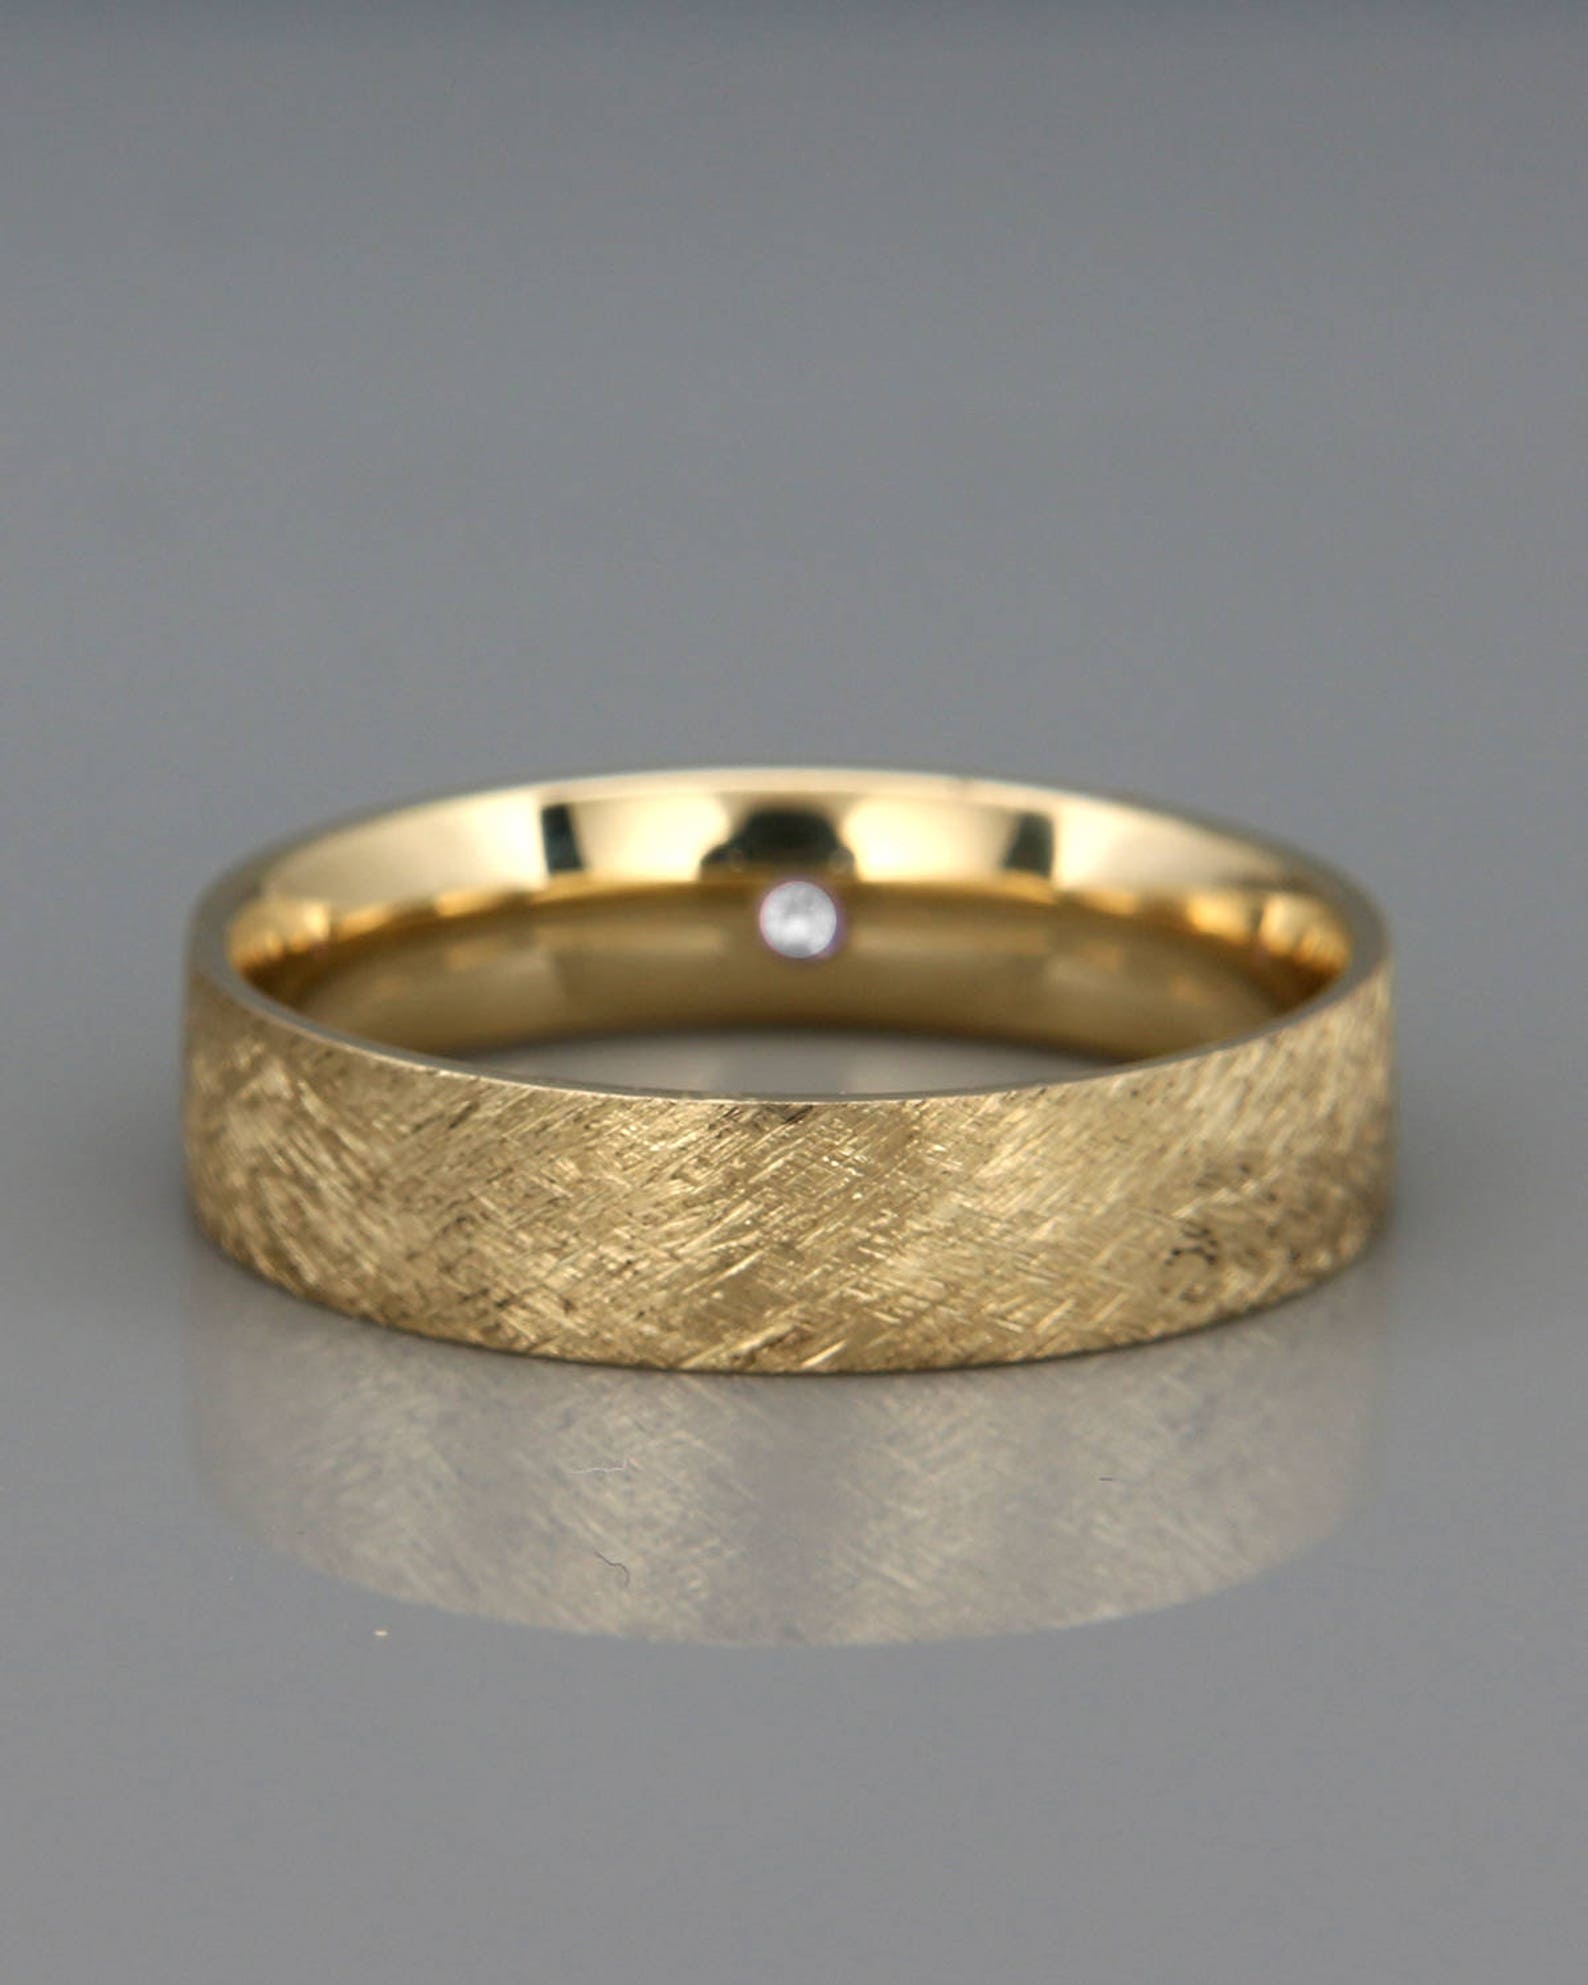 14k Gold Men's Wedding Ring Set With a Hidden Diamond | Etsy